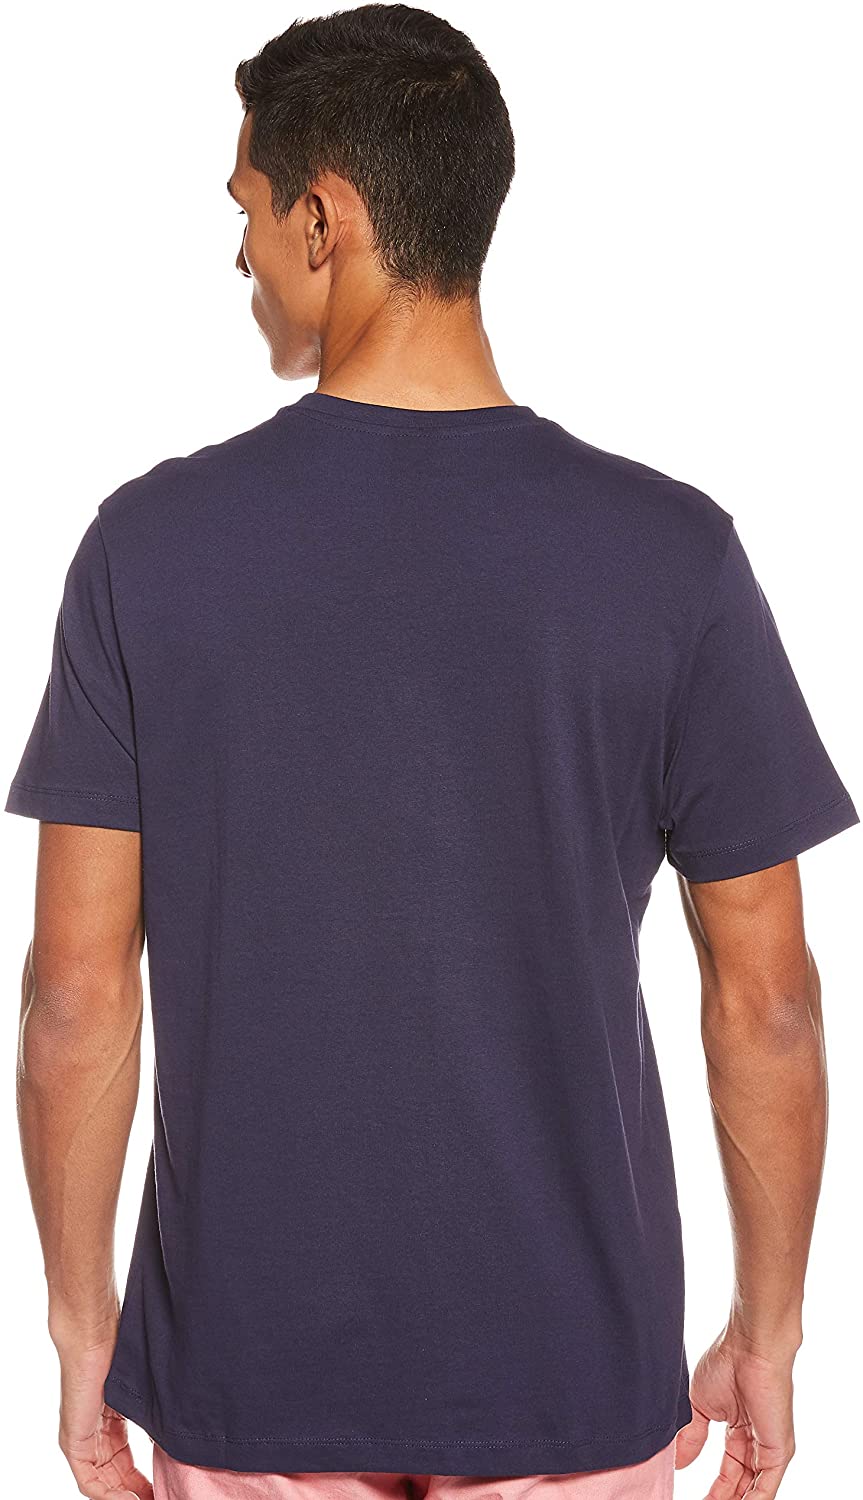 U.S. Polo Assn. Men's V-Neck T-Shirt - image 2 of 5